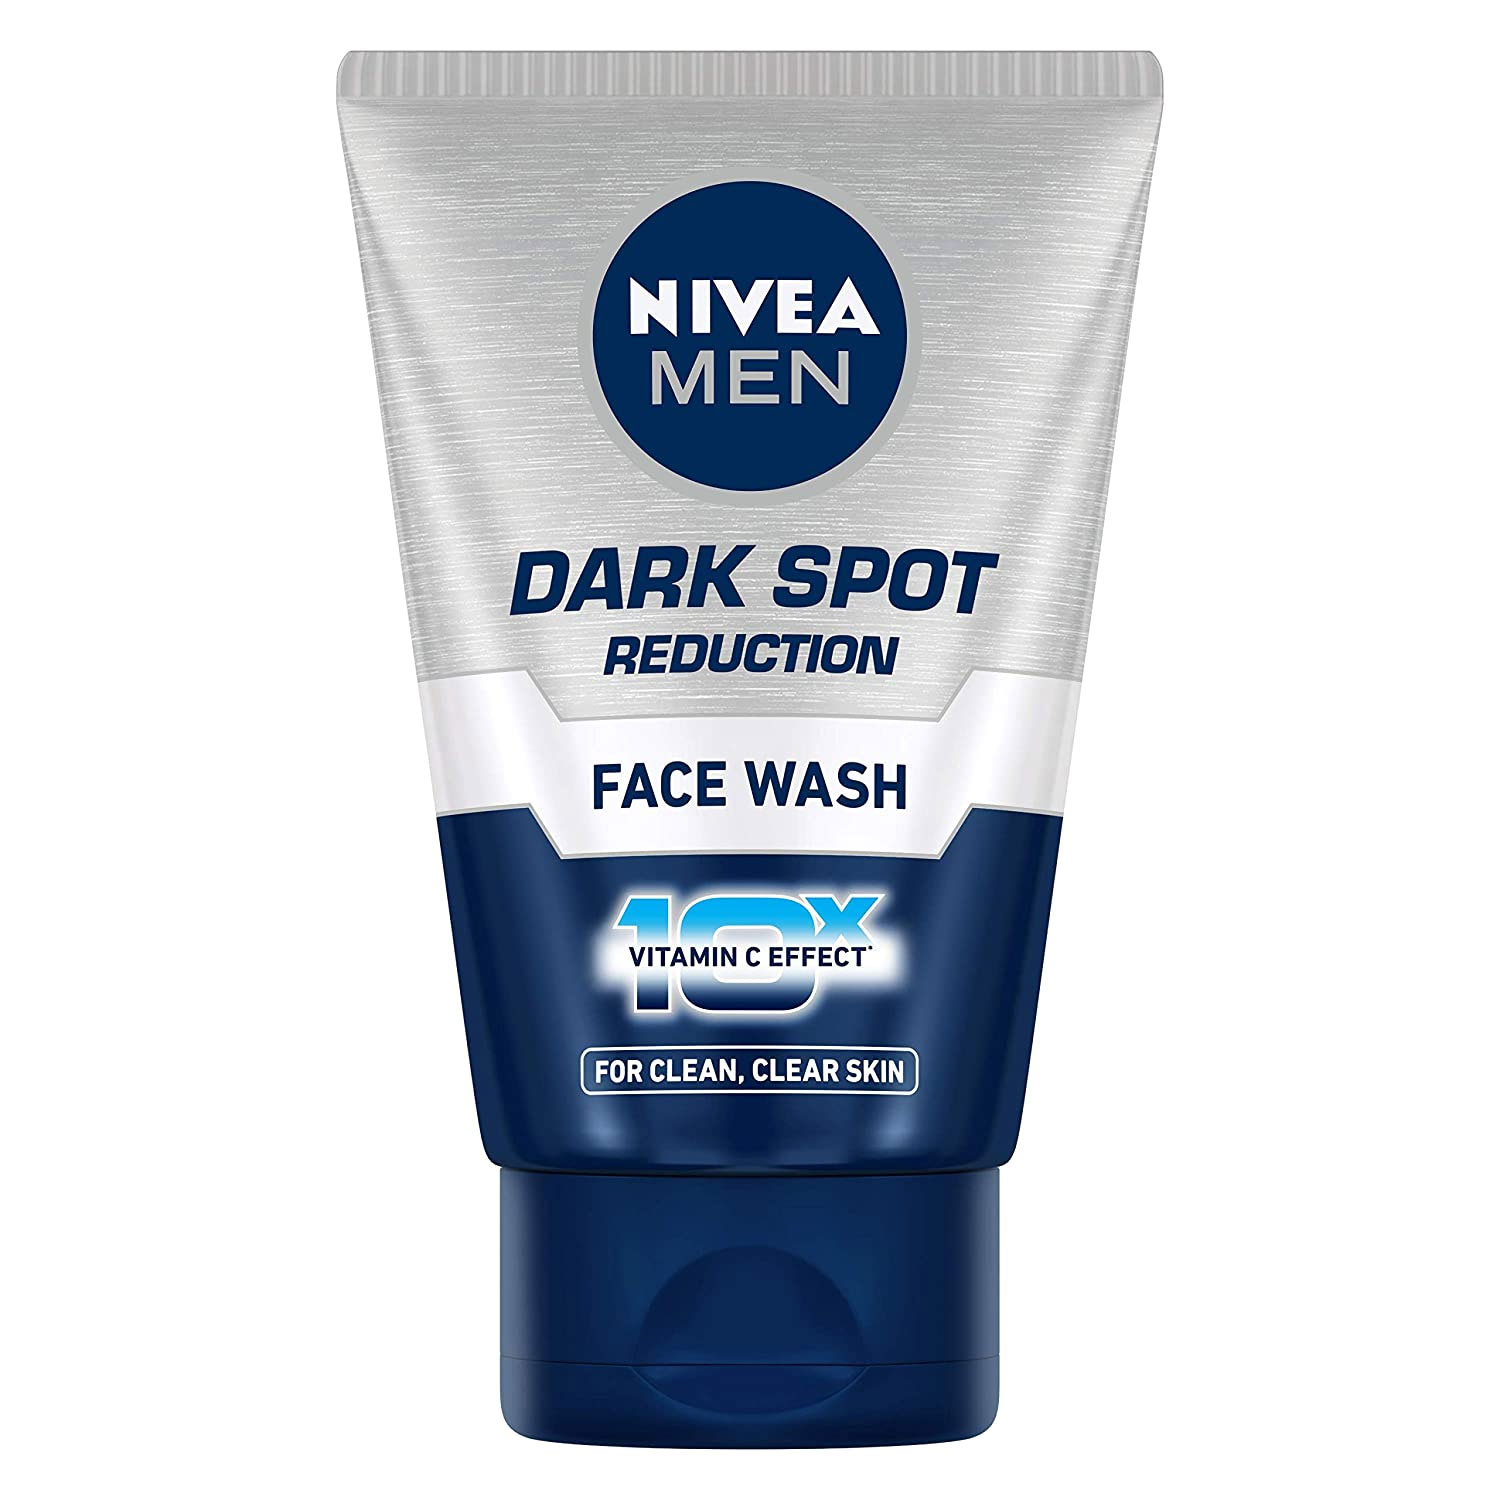 Nivea men face wash dark spot reduction, 50gm